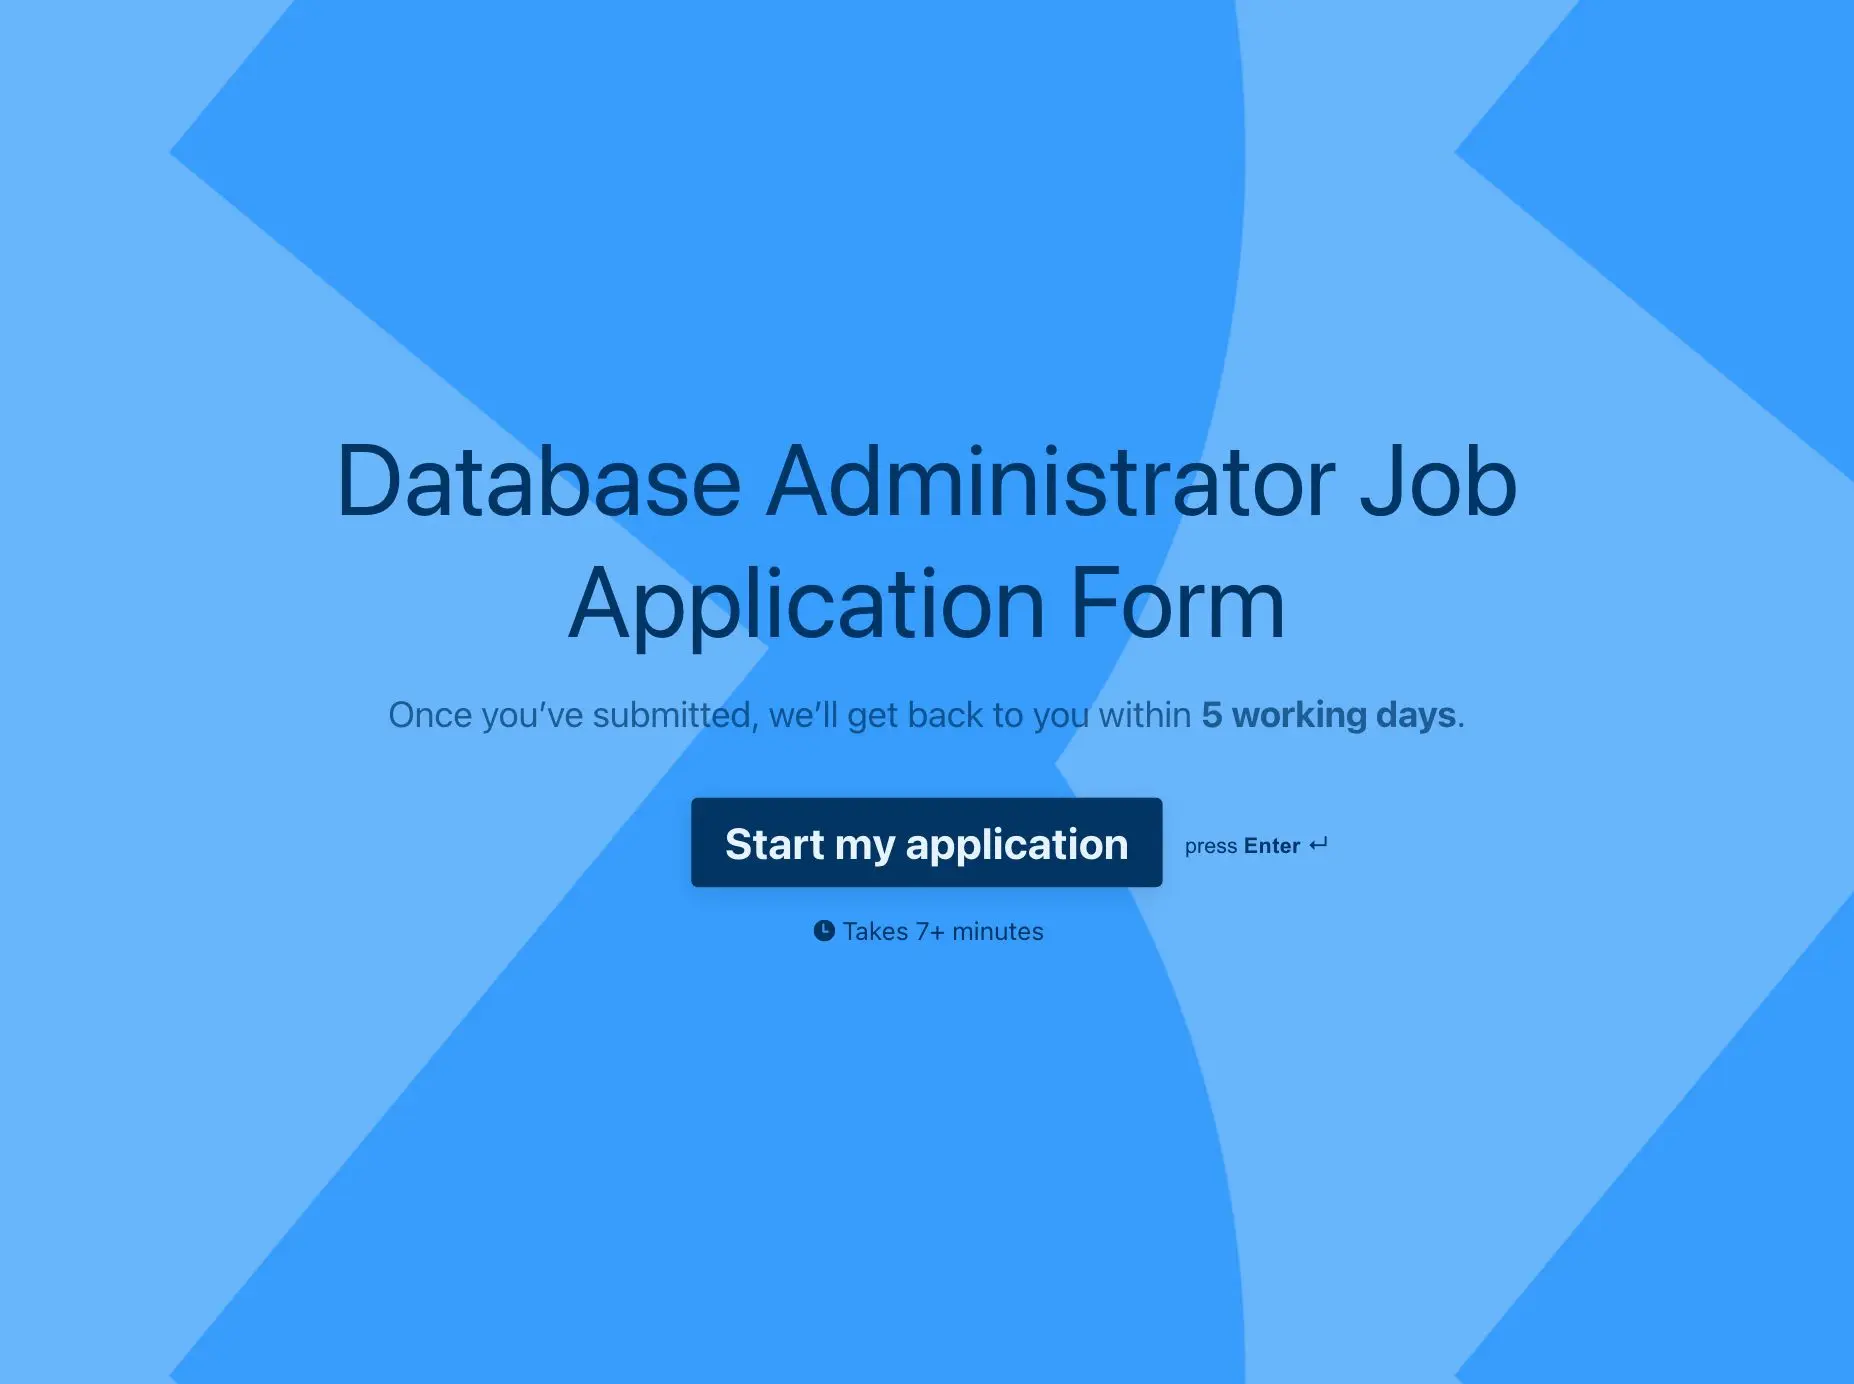 Database Administrator Job Application Form Template Hero